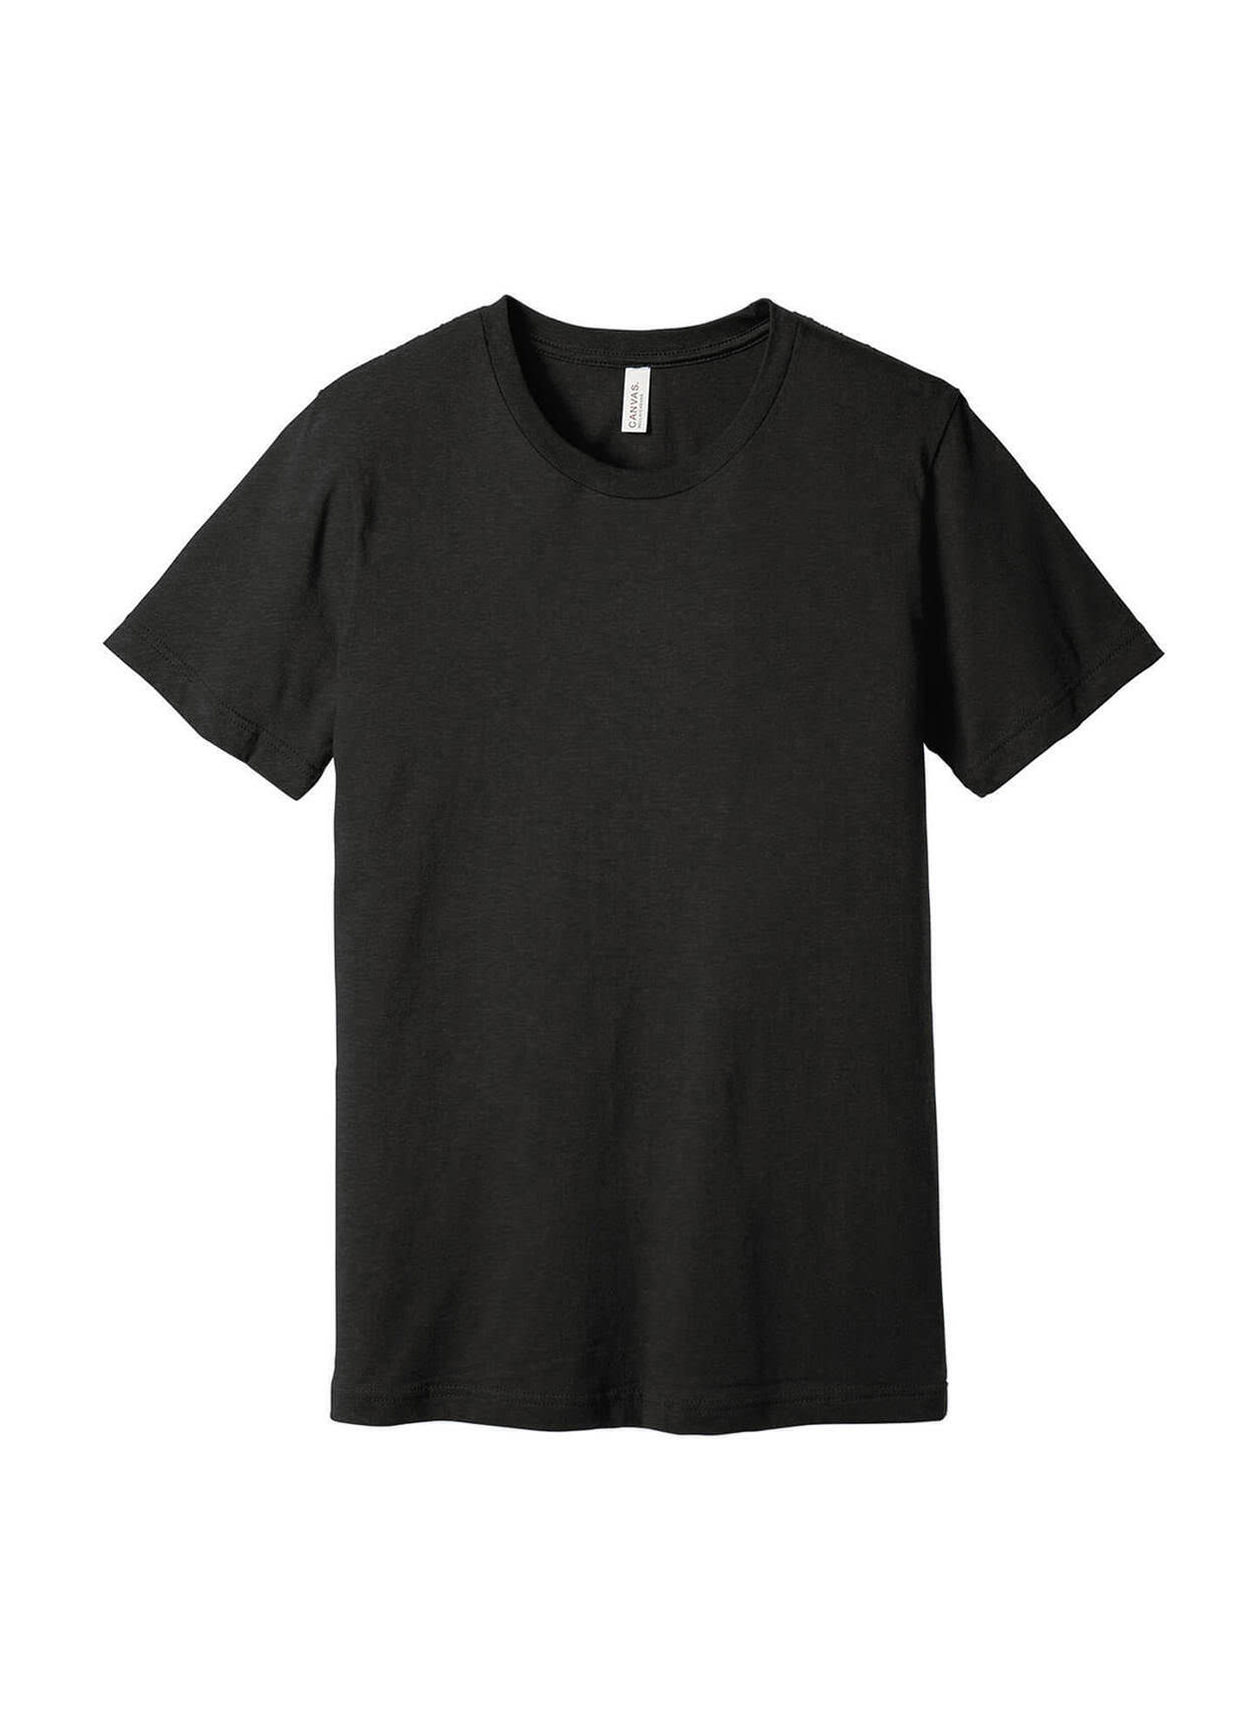 Bella + Canvas Men's Black Heather CVC T-Shirt